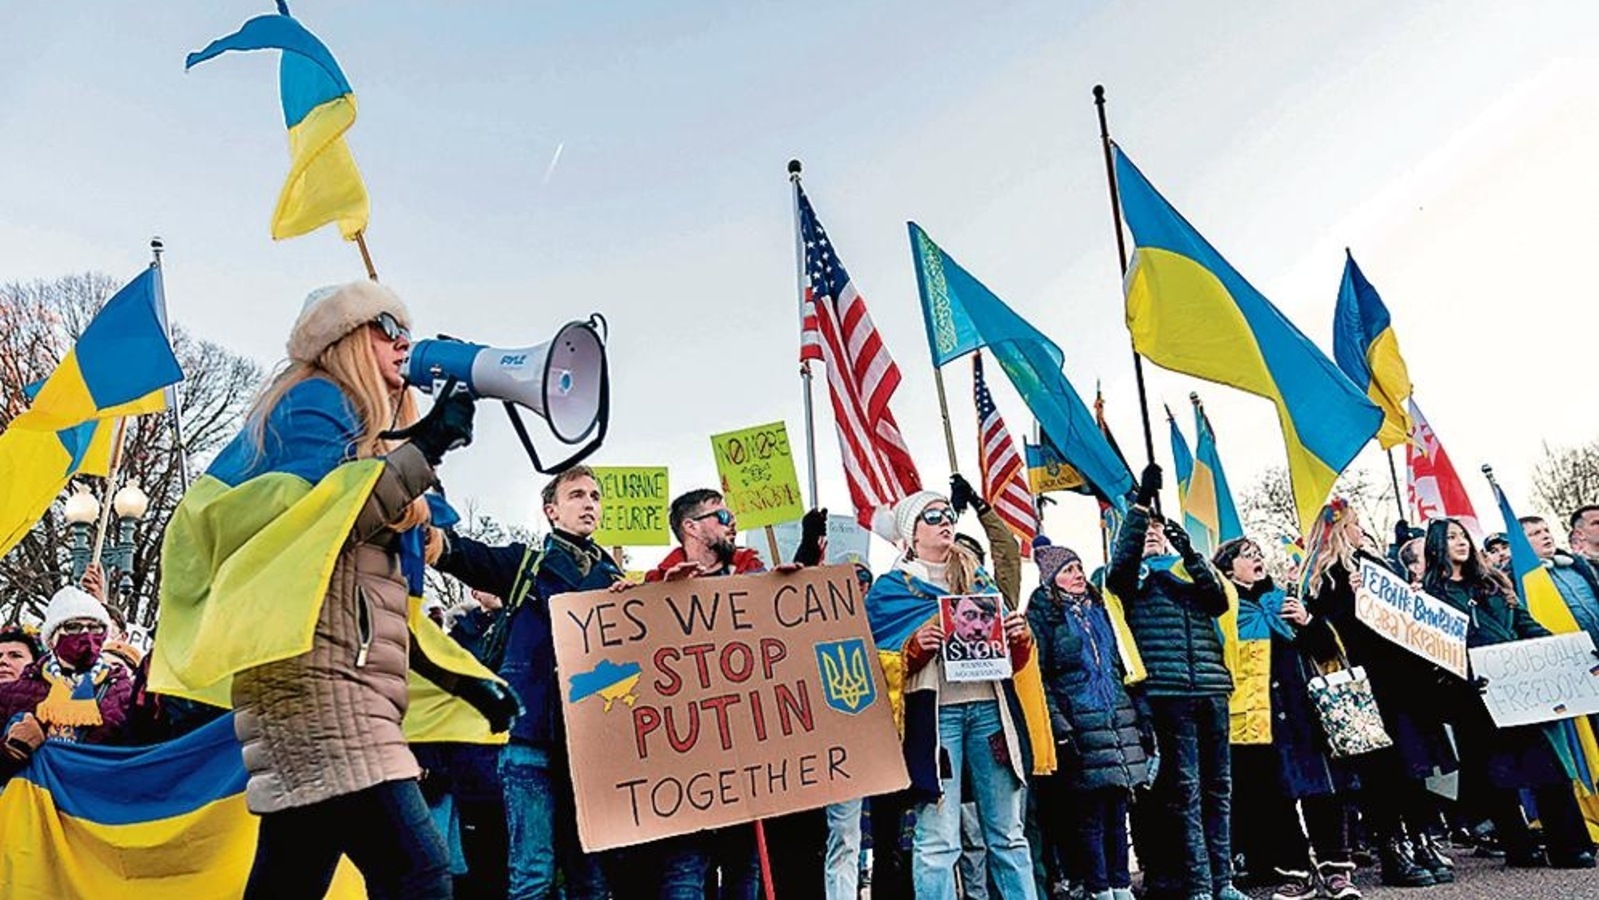 Ukrainian people. Украинцы с флагом. Украинцы люди. Ребенок с флагом Украины. Флаг Украины 2022.